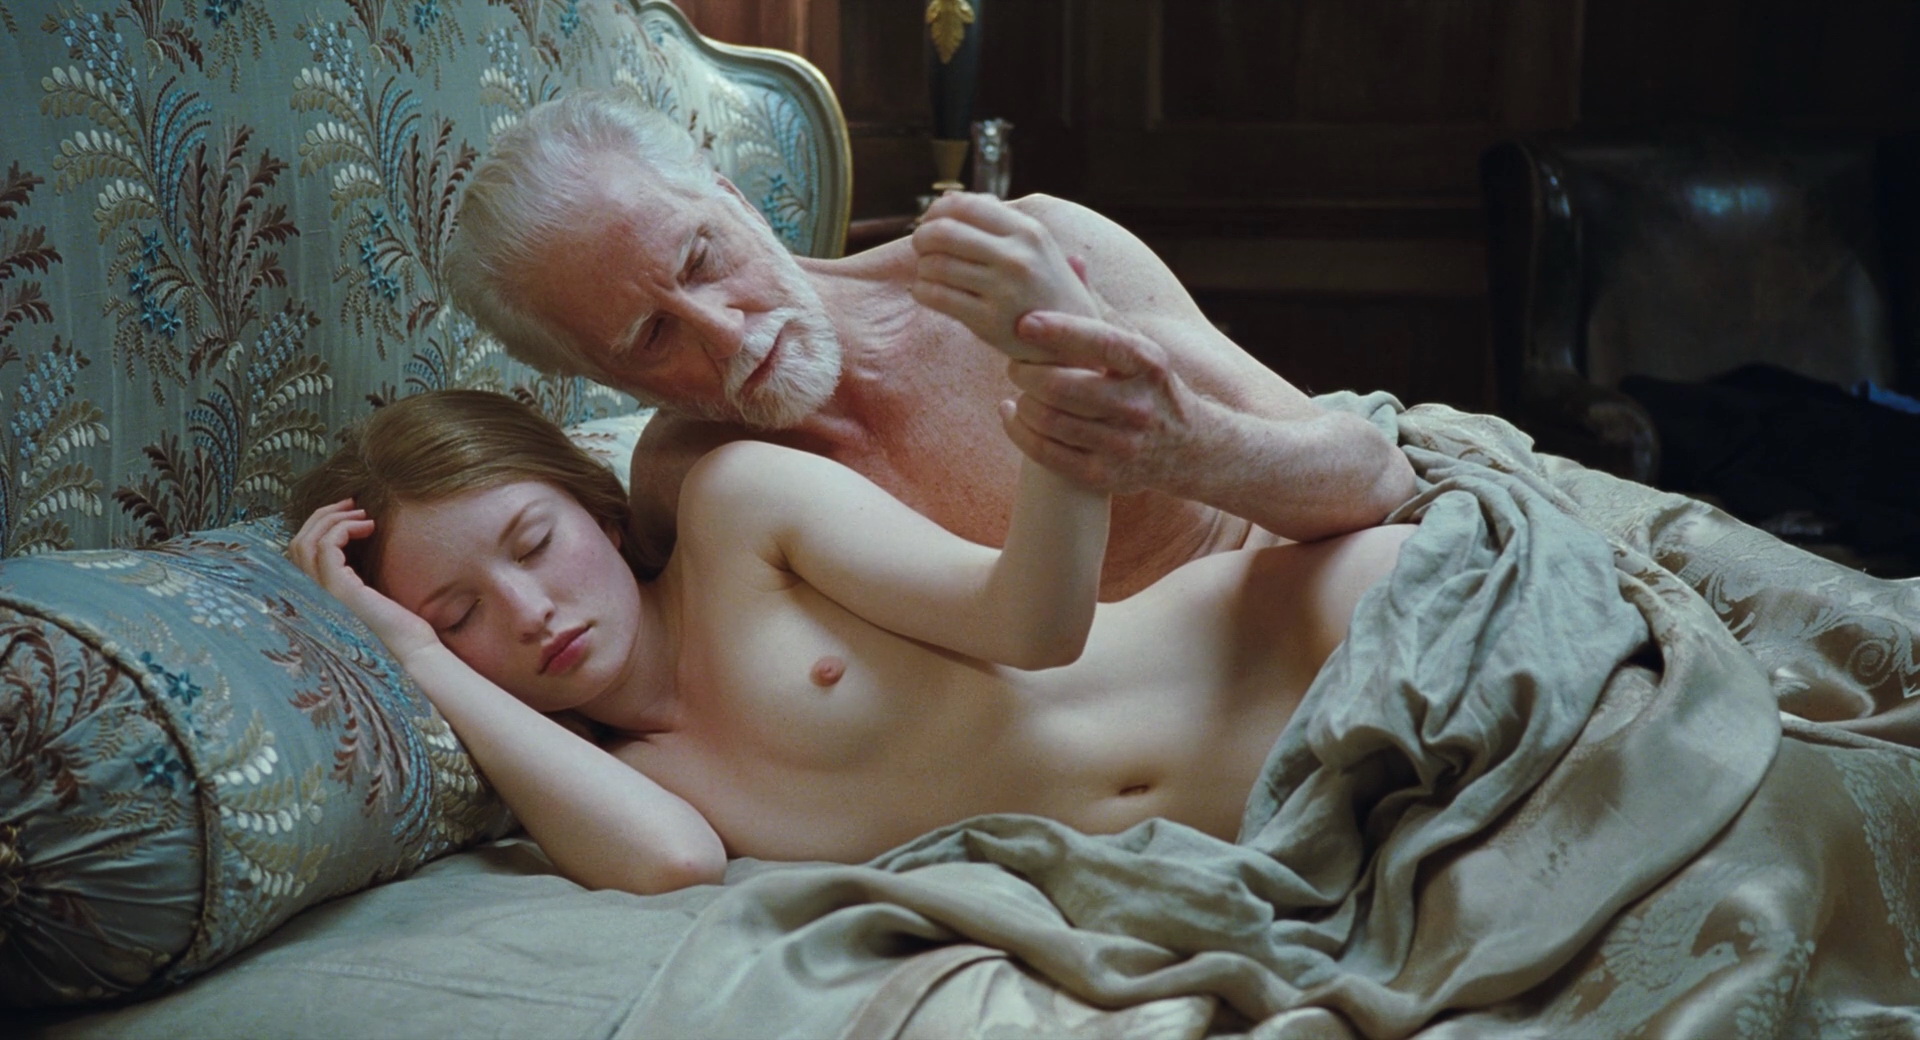 Nude scene from movie sleeping beauty